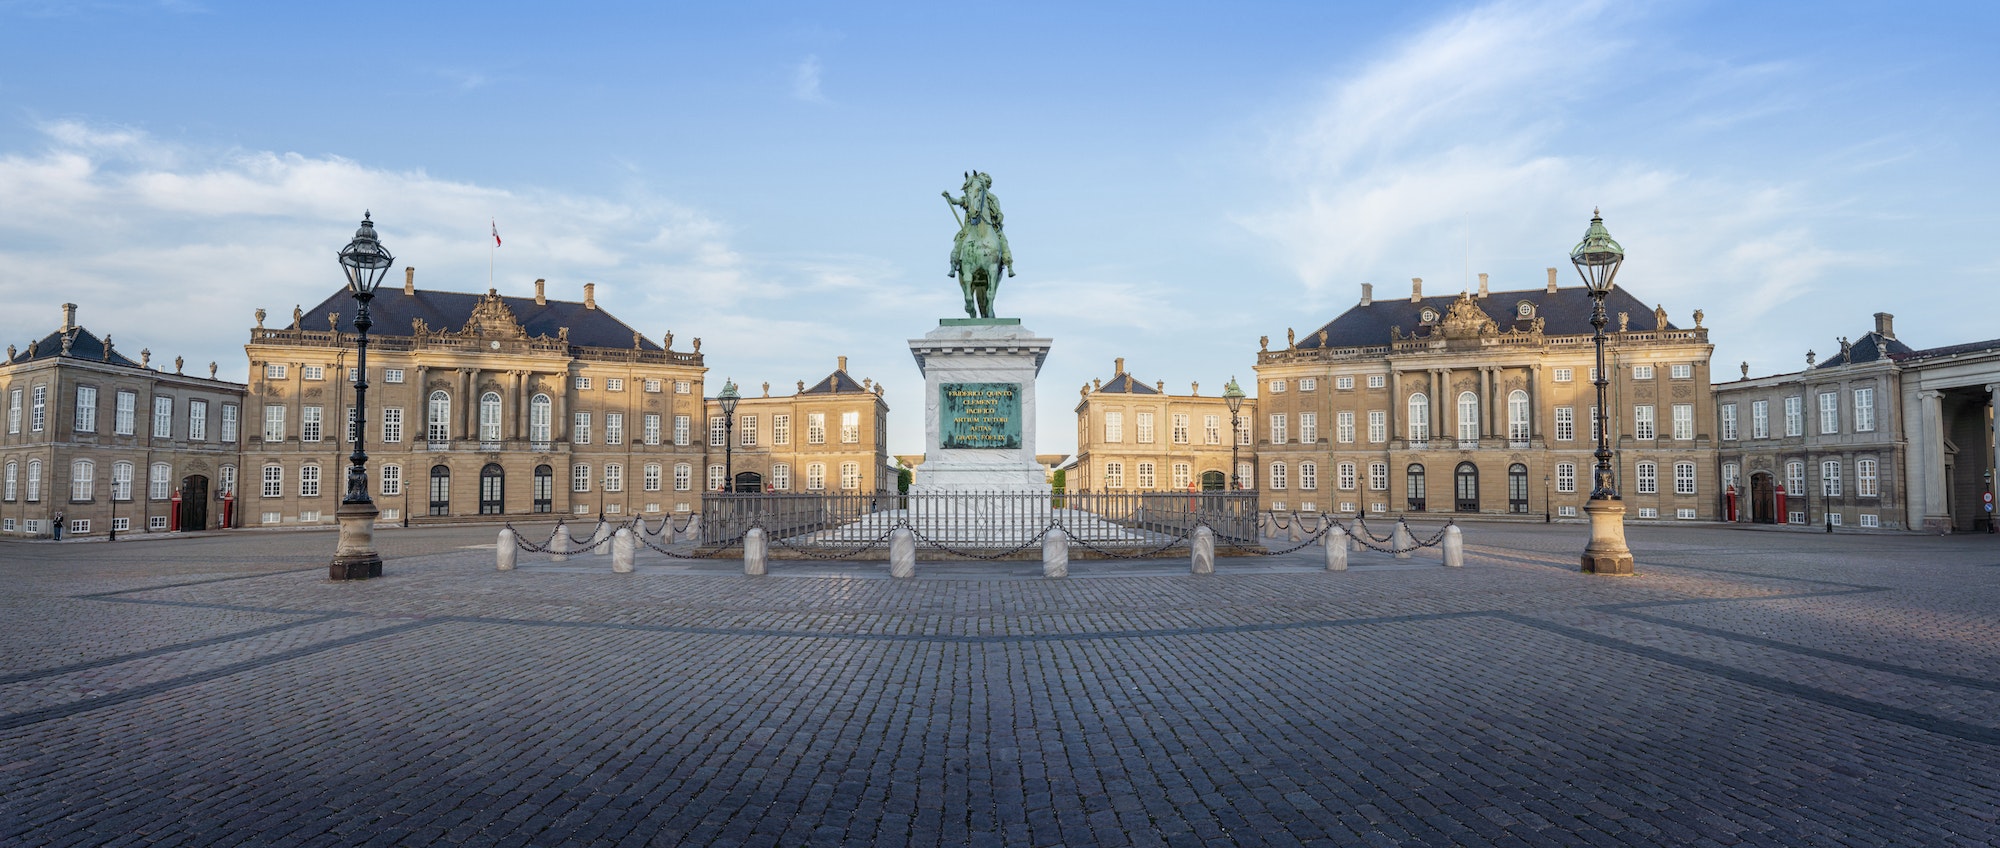 Panoramic view of Amalienborg Palace and Frederick V Statue - Copenhagen, Denmark